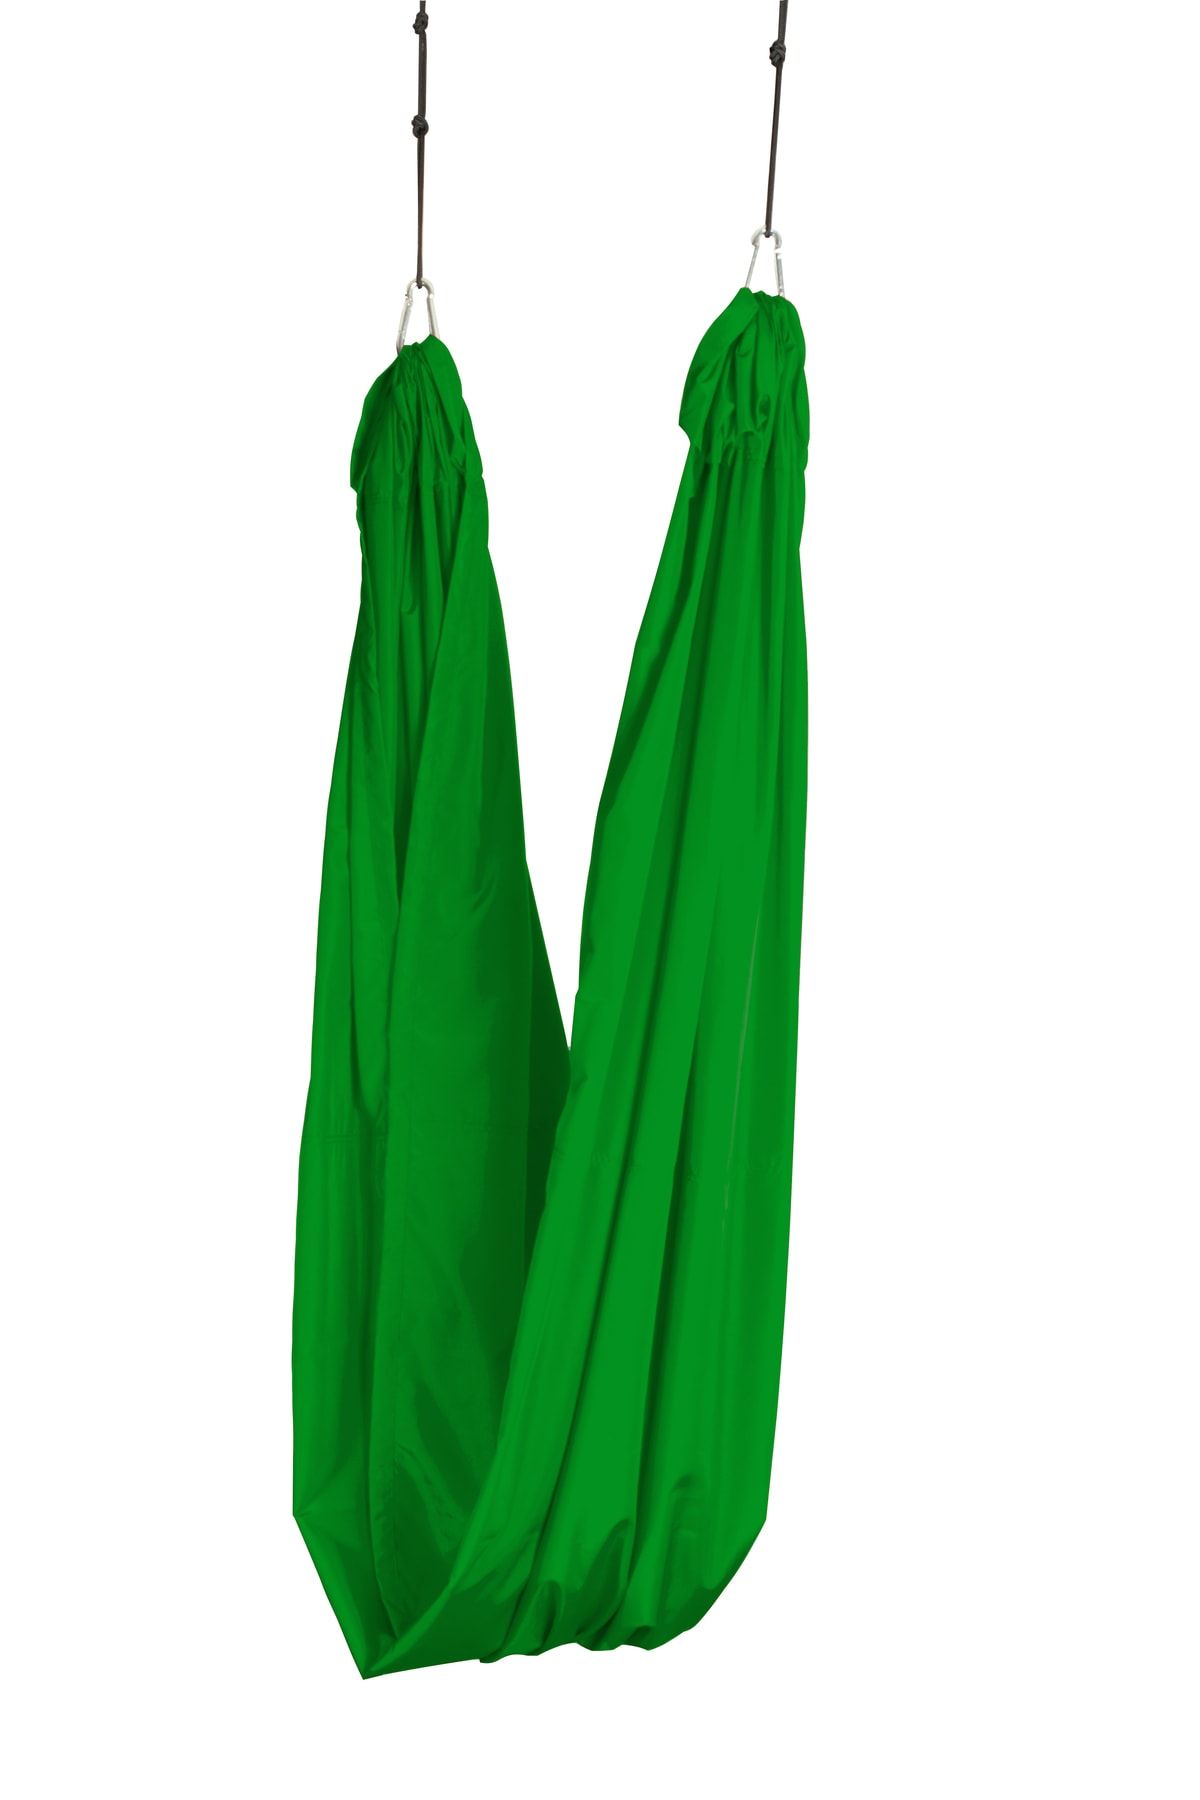 Treyoga Yoga Hamağı Yeşil, Yoga Hamağı Seti -